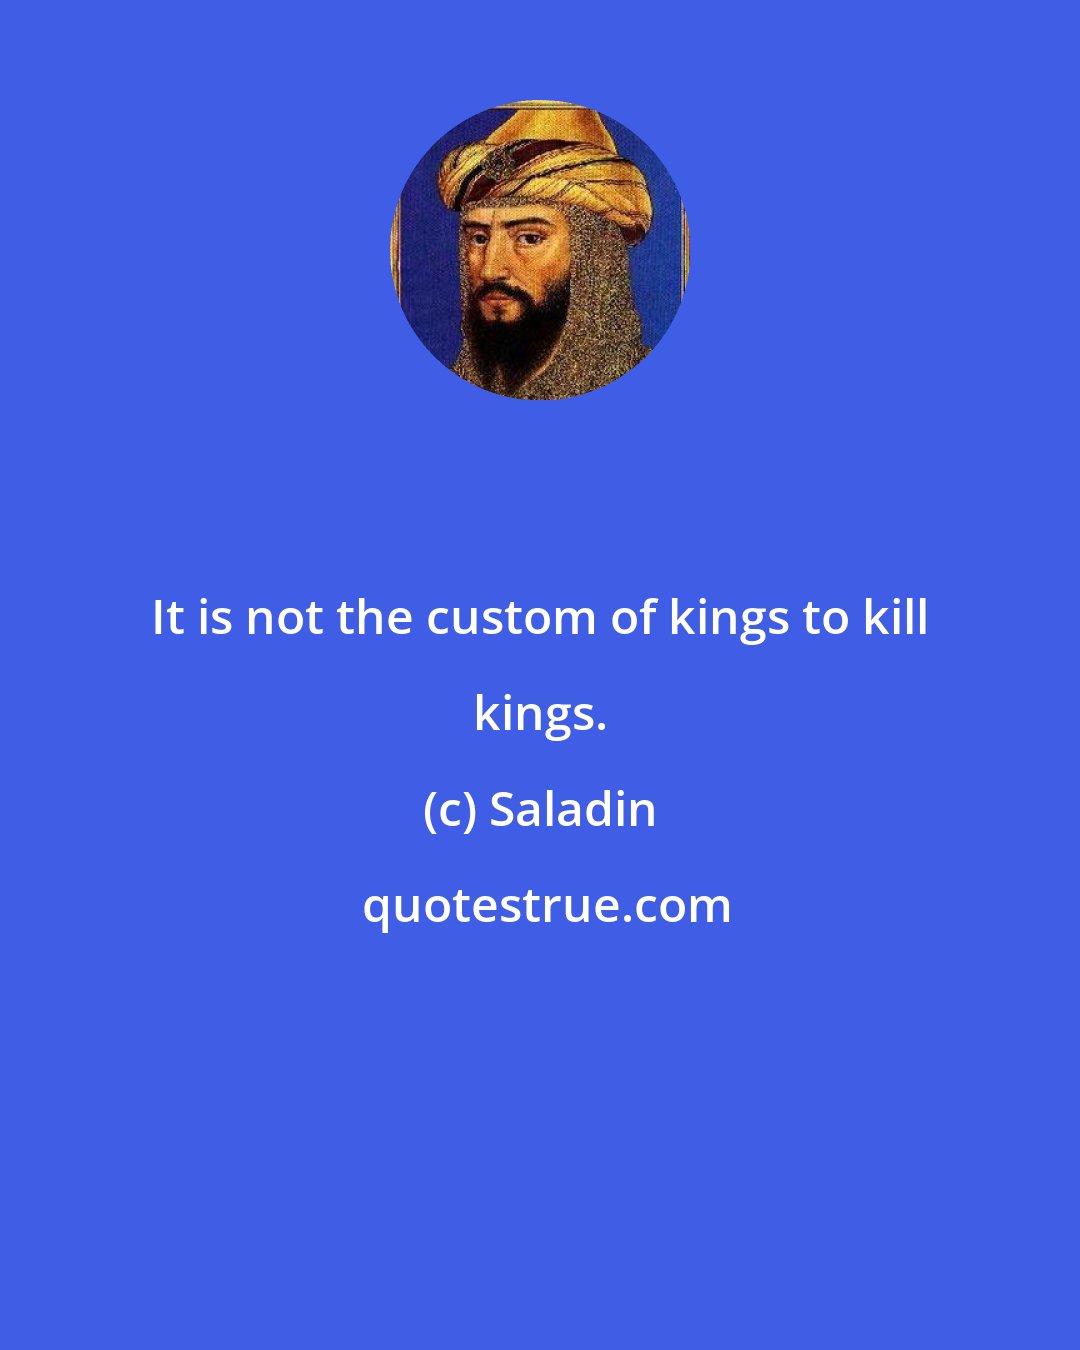 Saladin: It is not the custom of kings to kill kings.